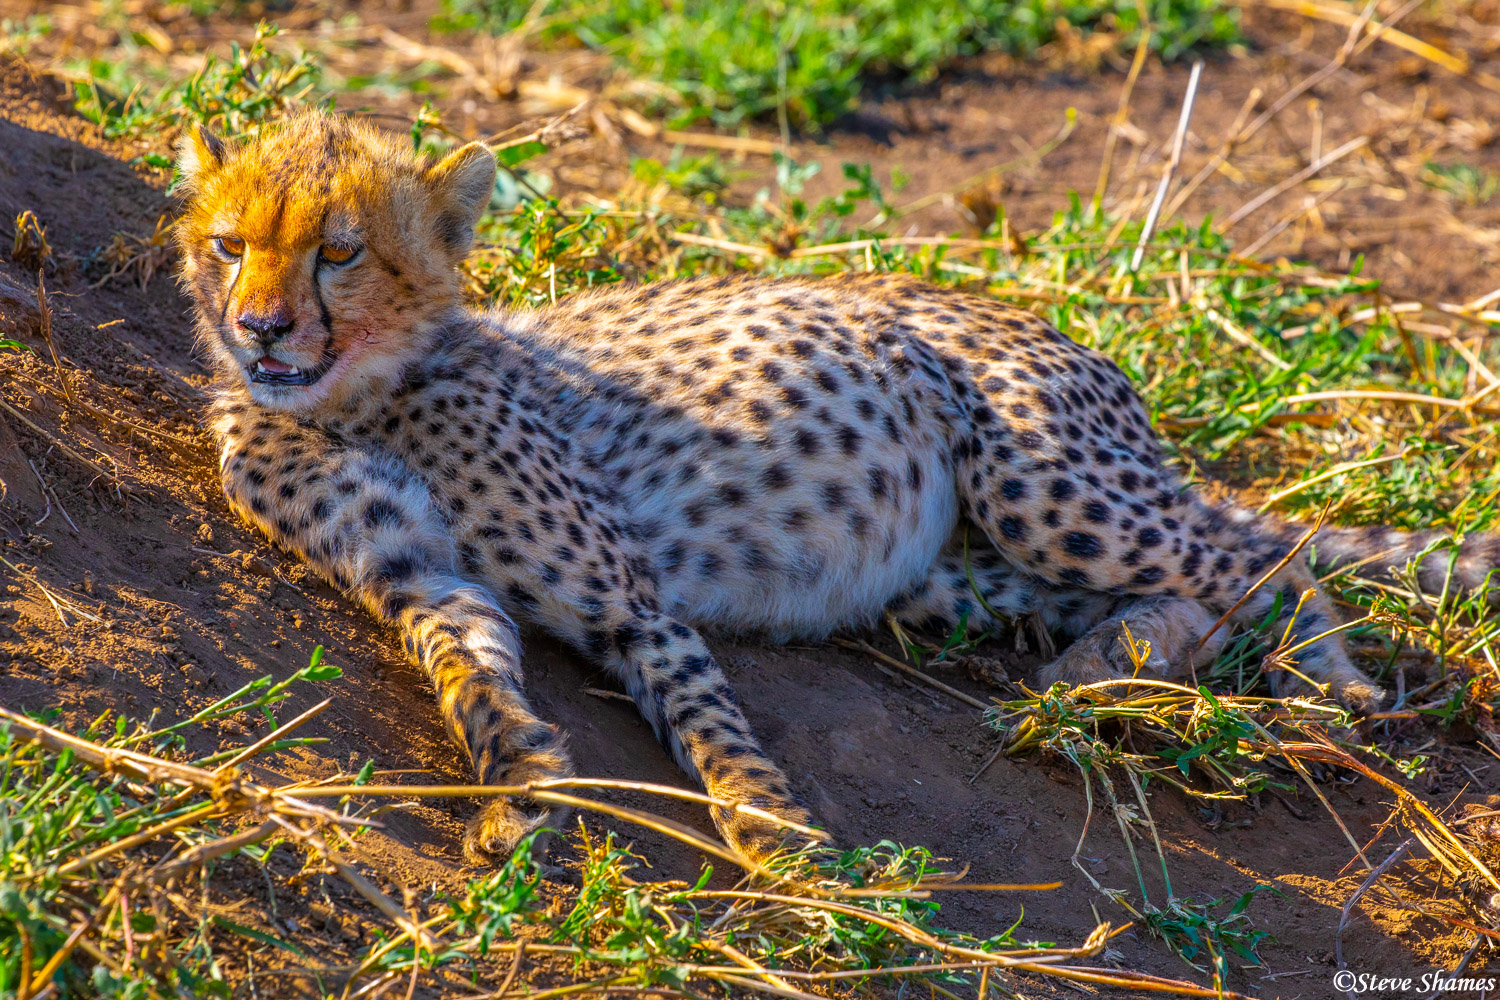 This cheetah cub has a belly full of gazelle.